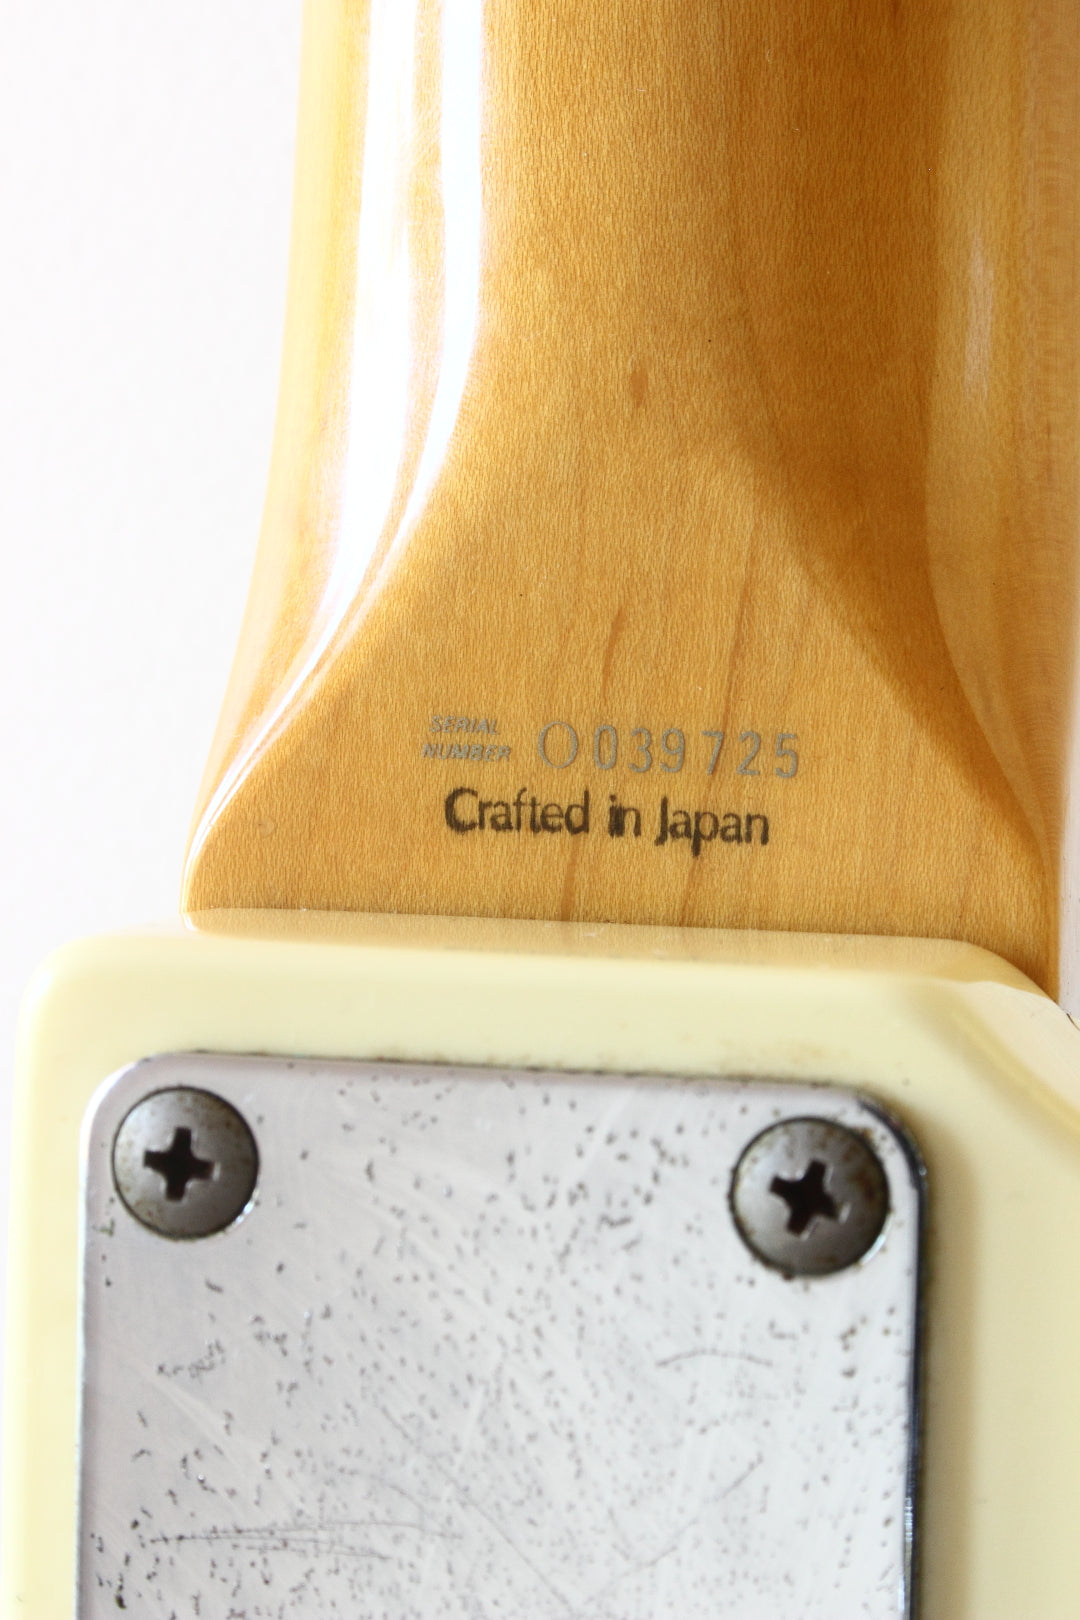 Fender Japan '70 Reissue Precision Bass PB70-70US Olympic White 1997-00